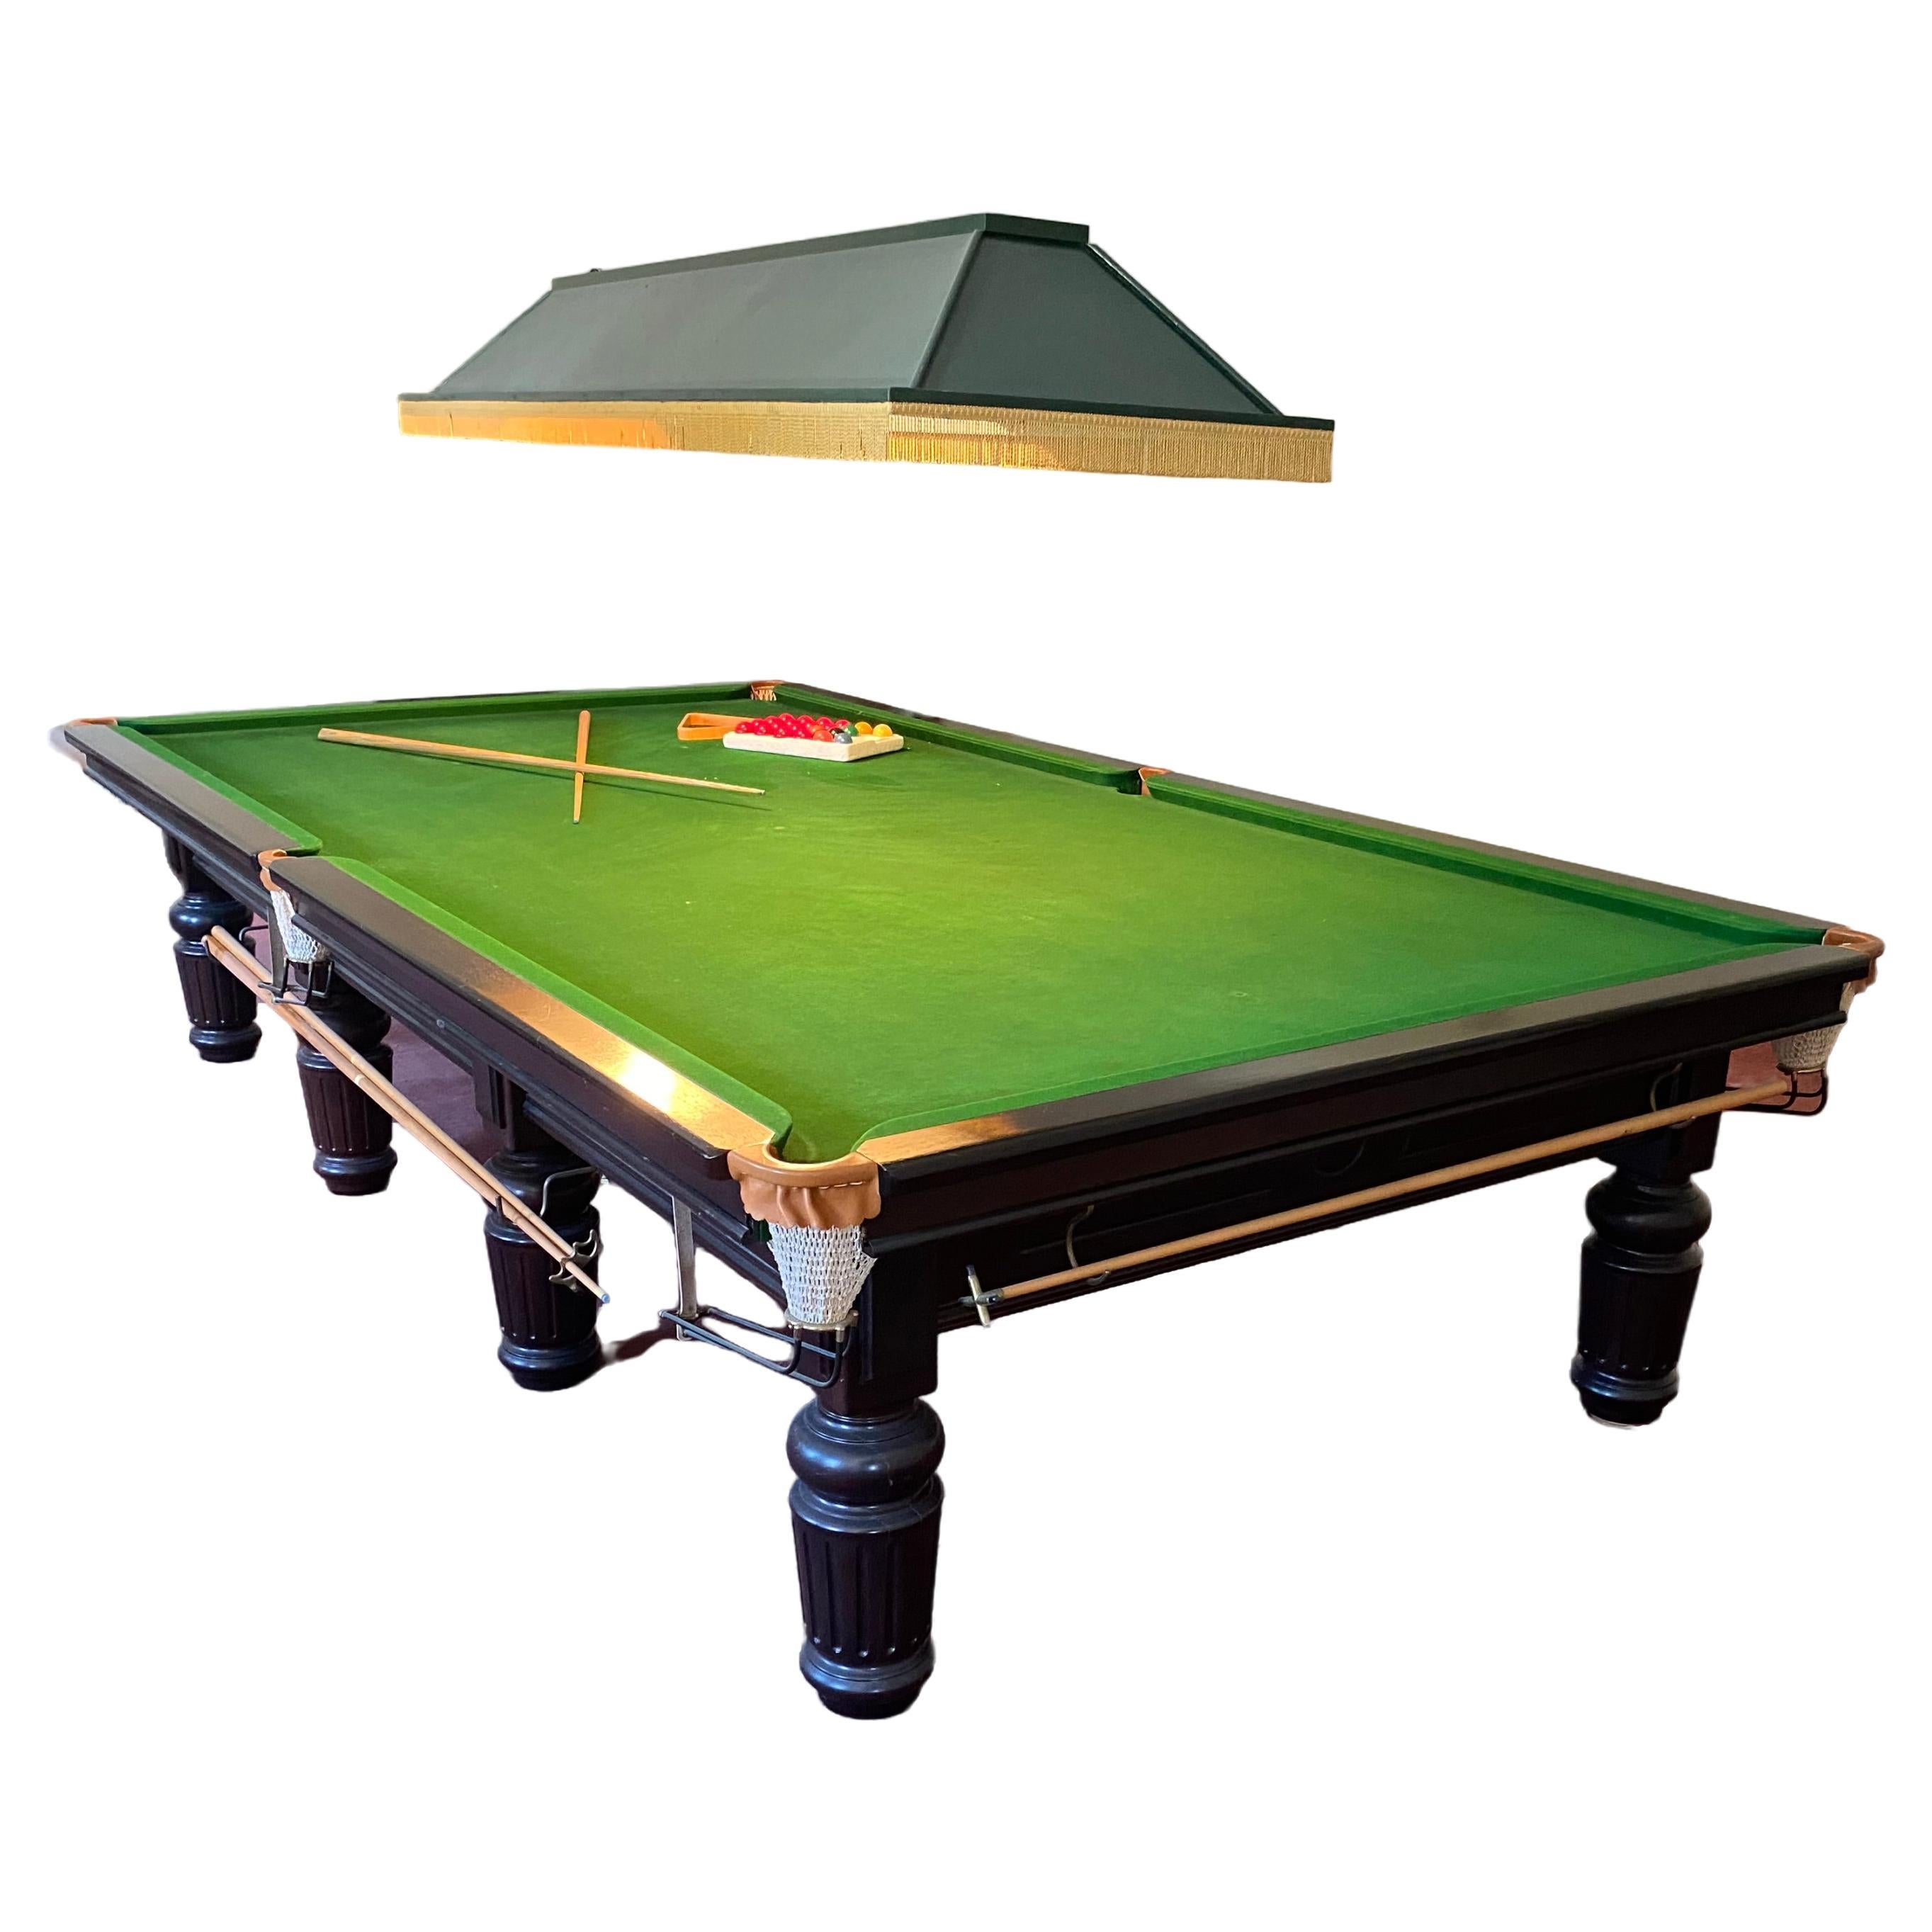 Full size Snooker/ Billiards Table 